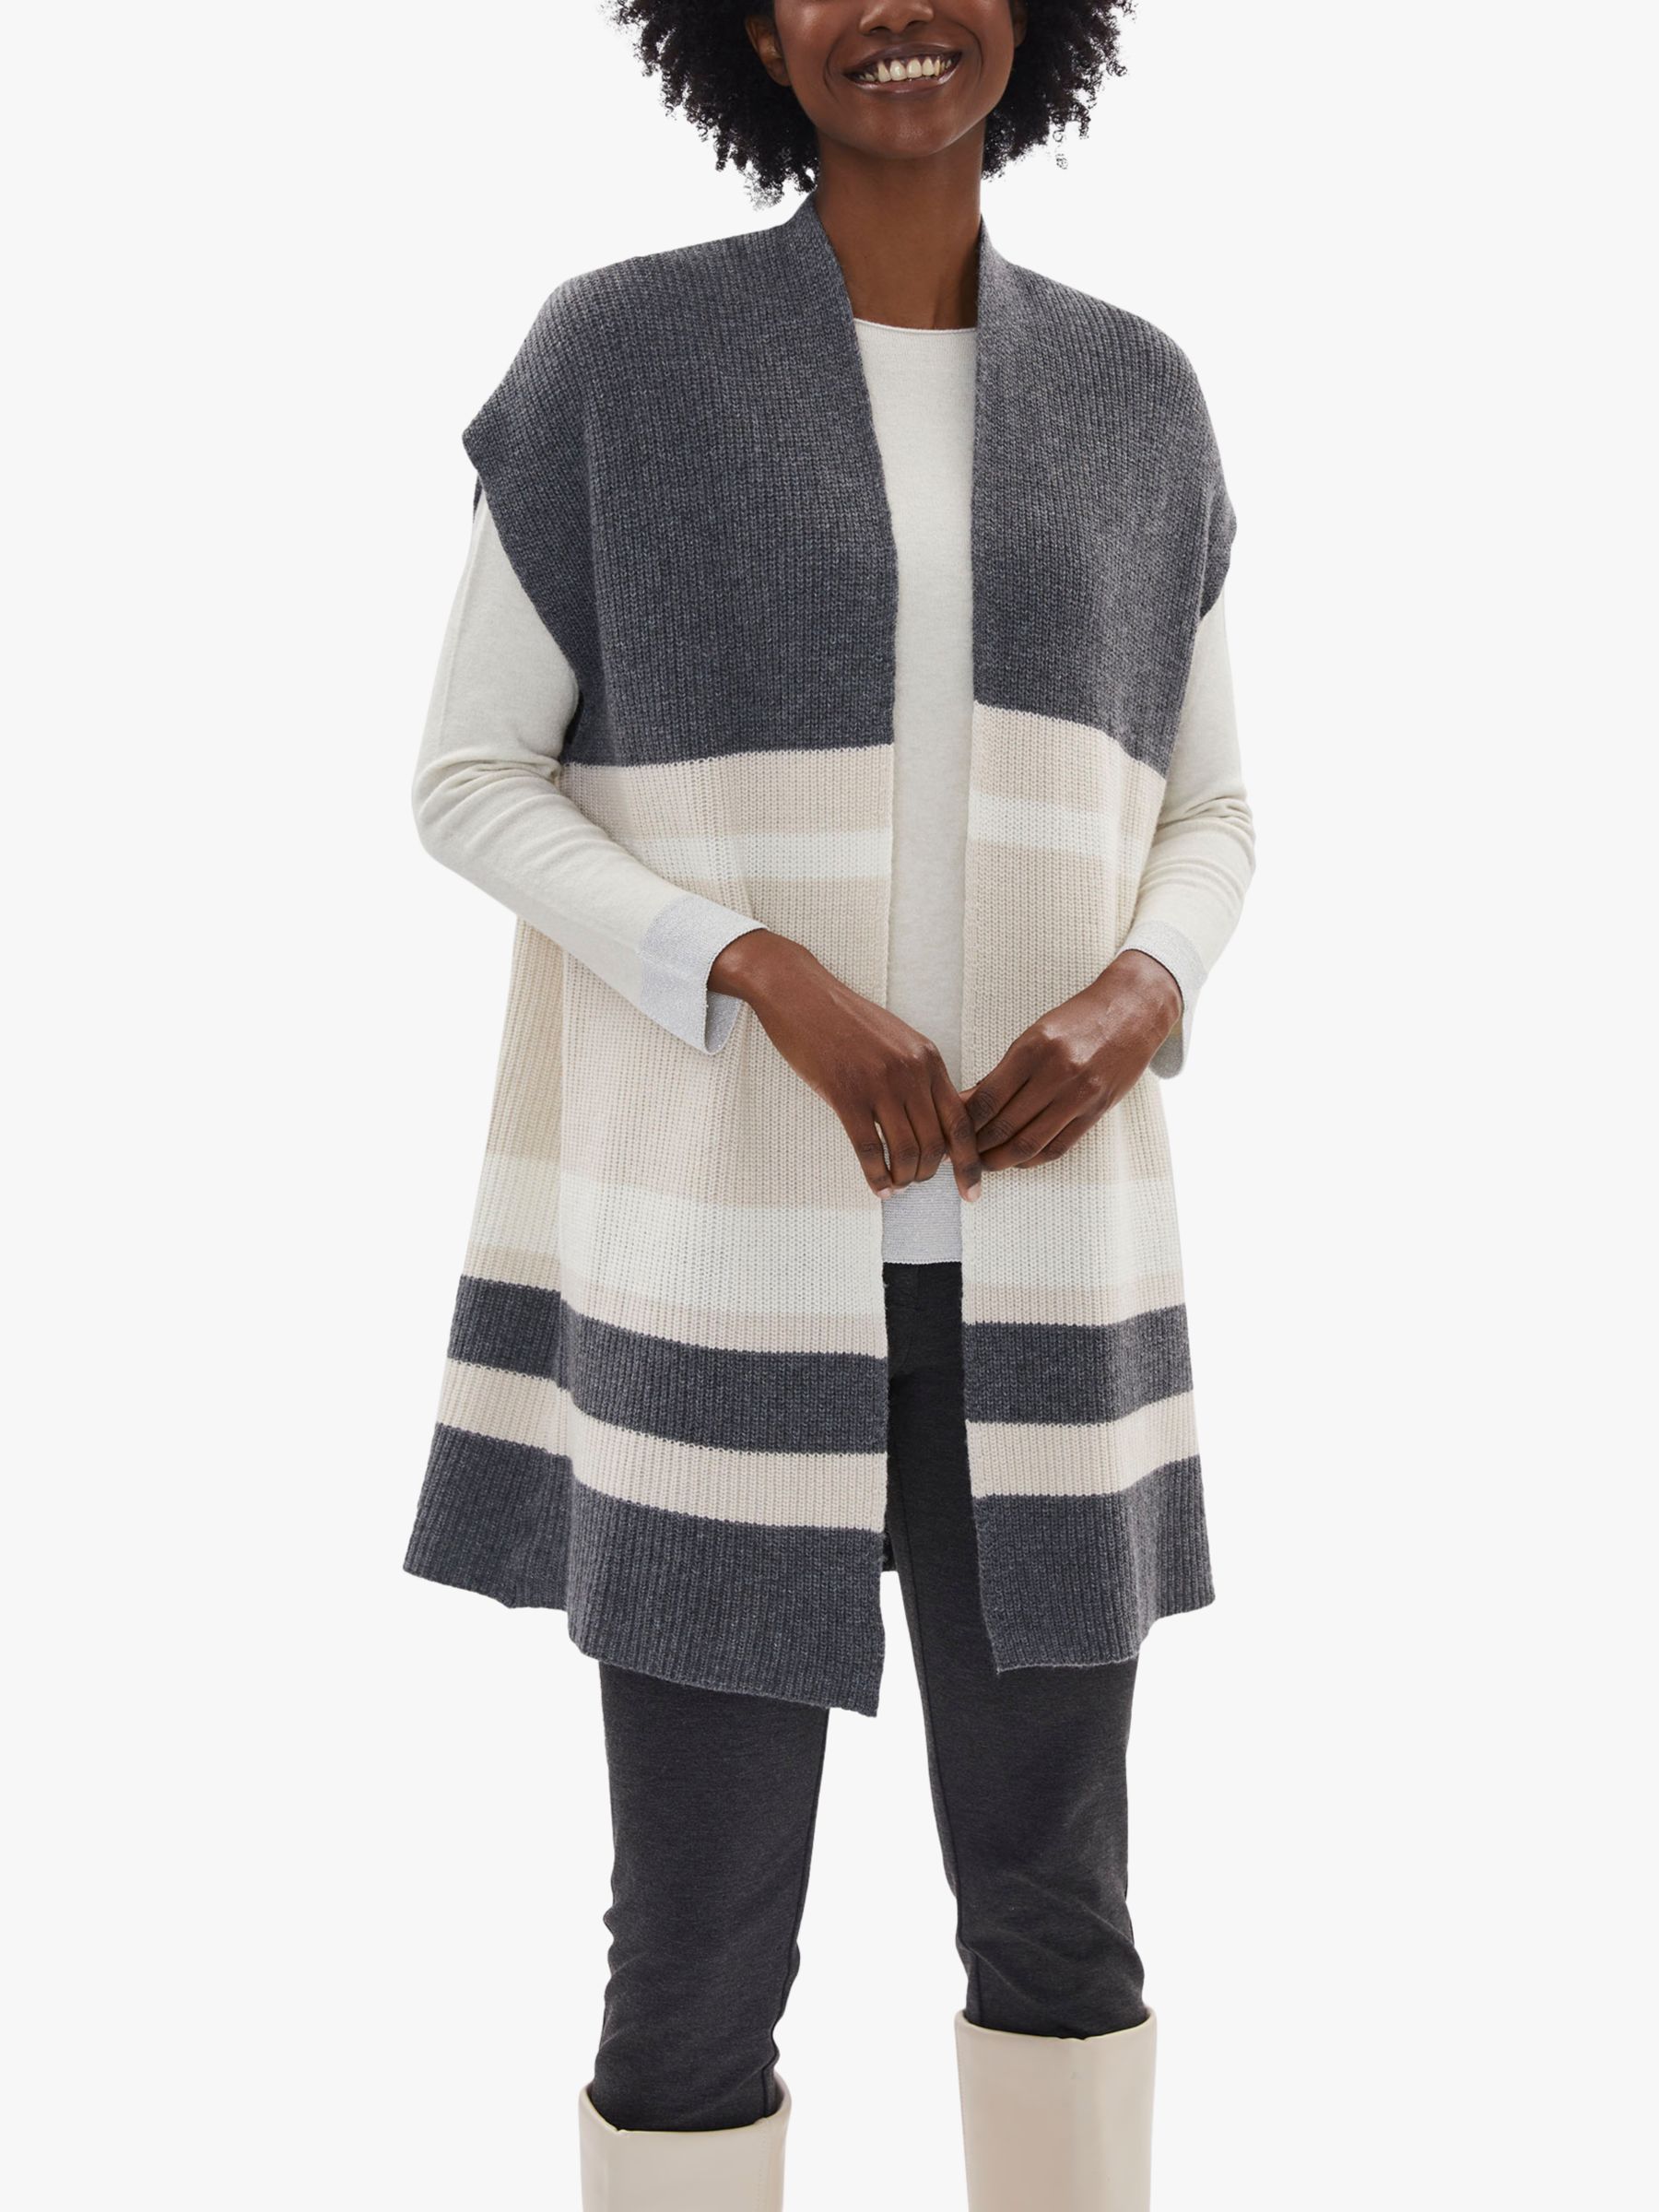 James Lakeland Striped Wool Blend Sleeveless Cardigan, Grey/Beige, 8